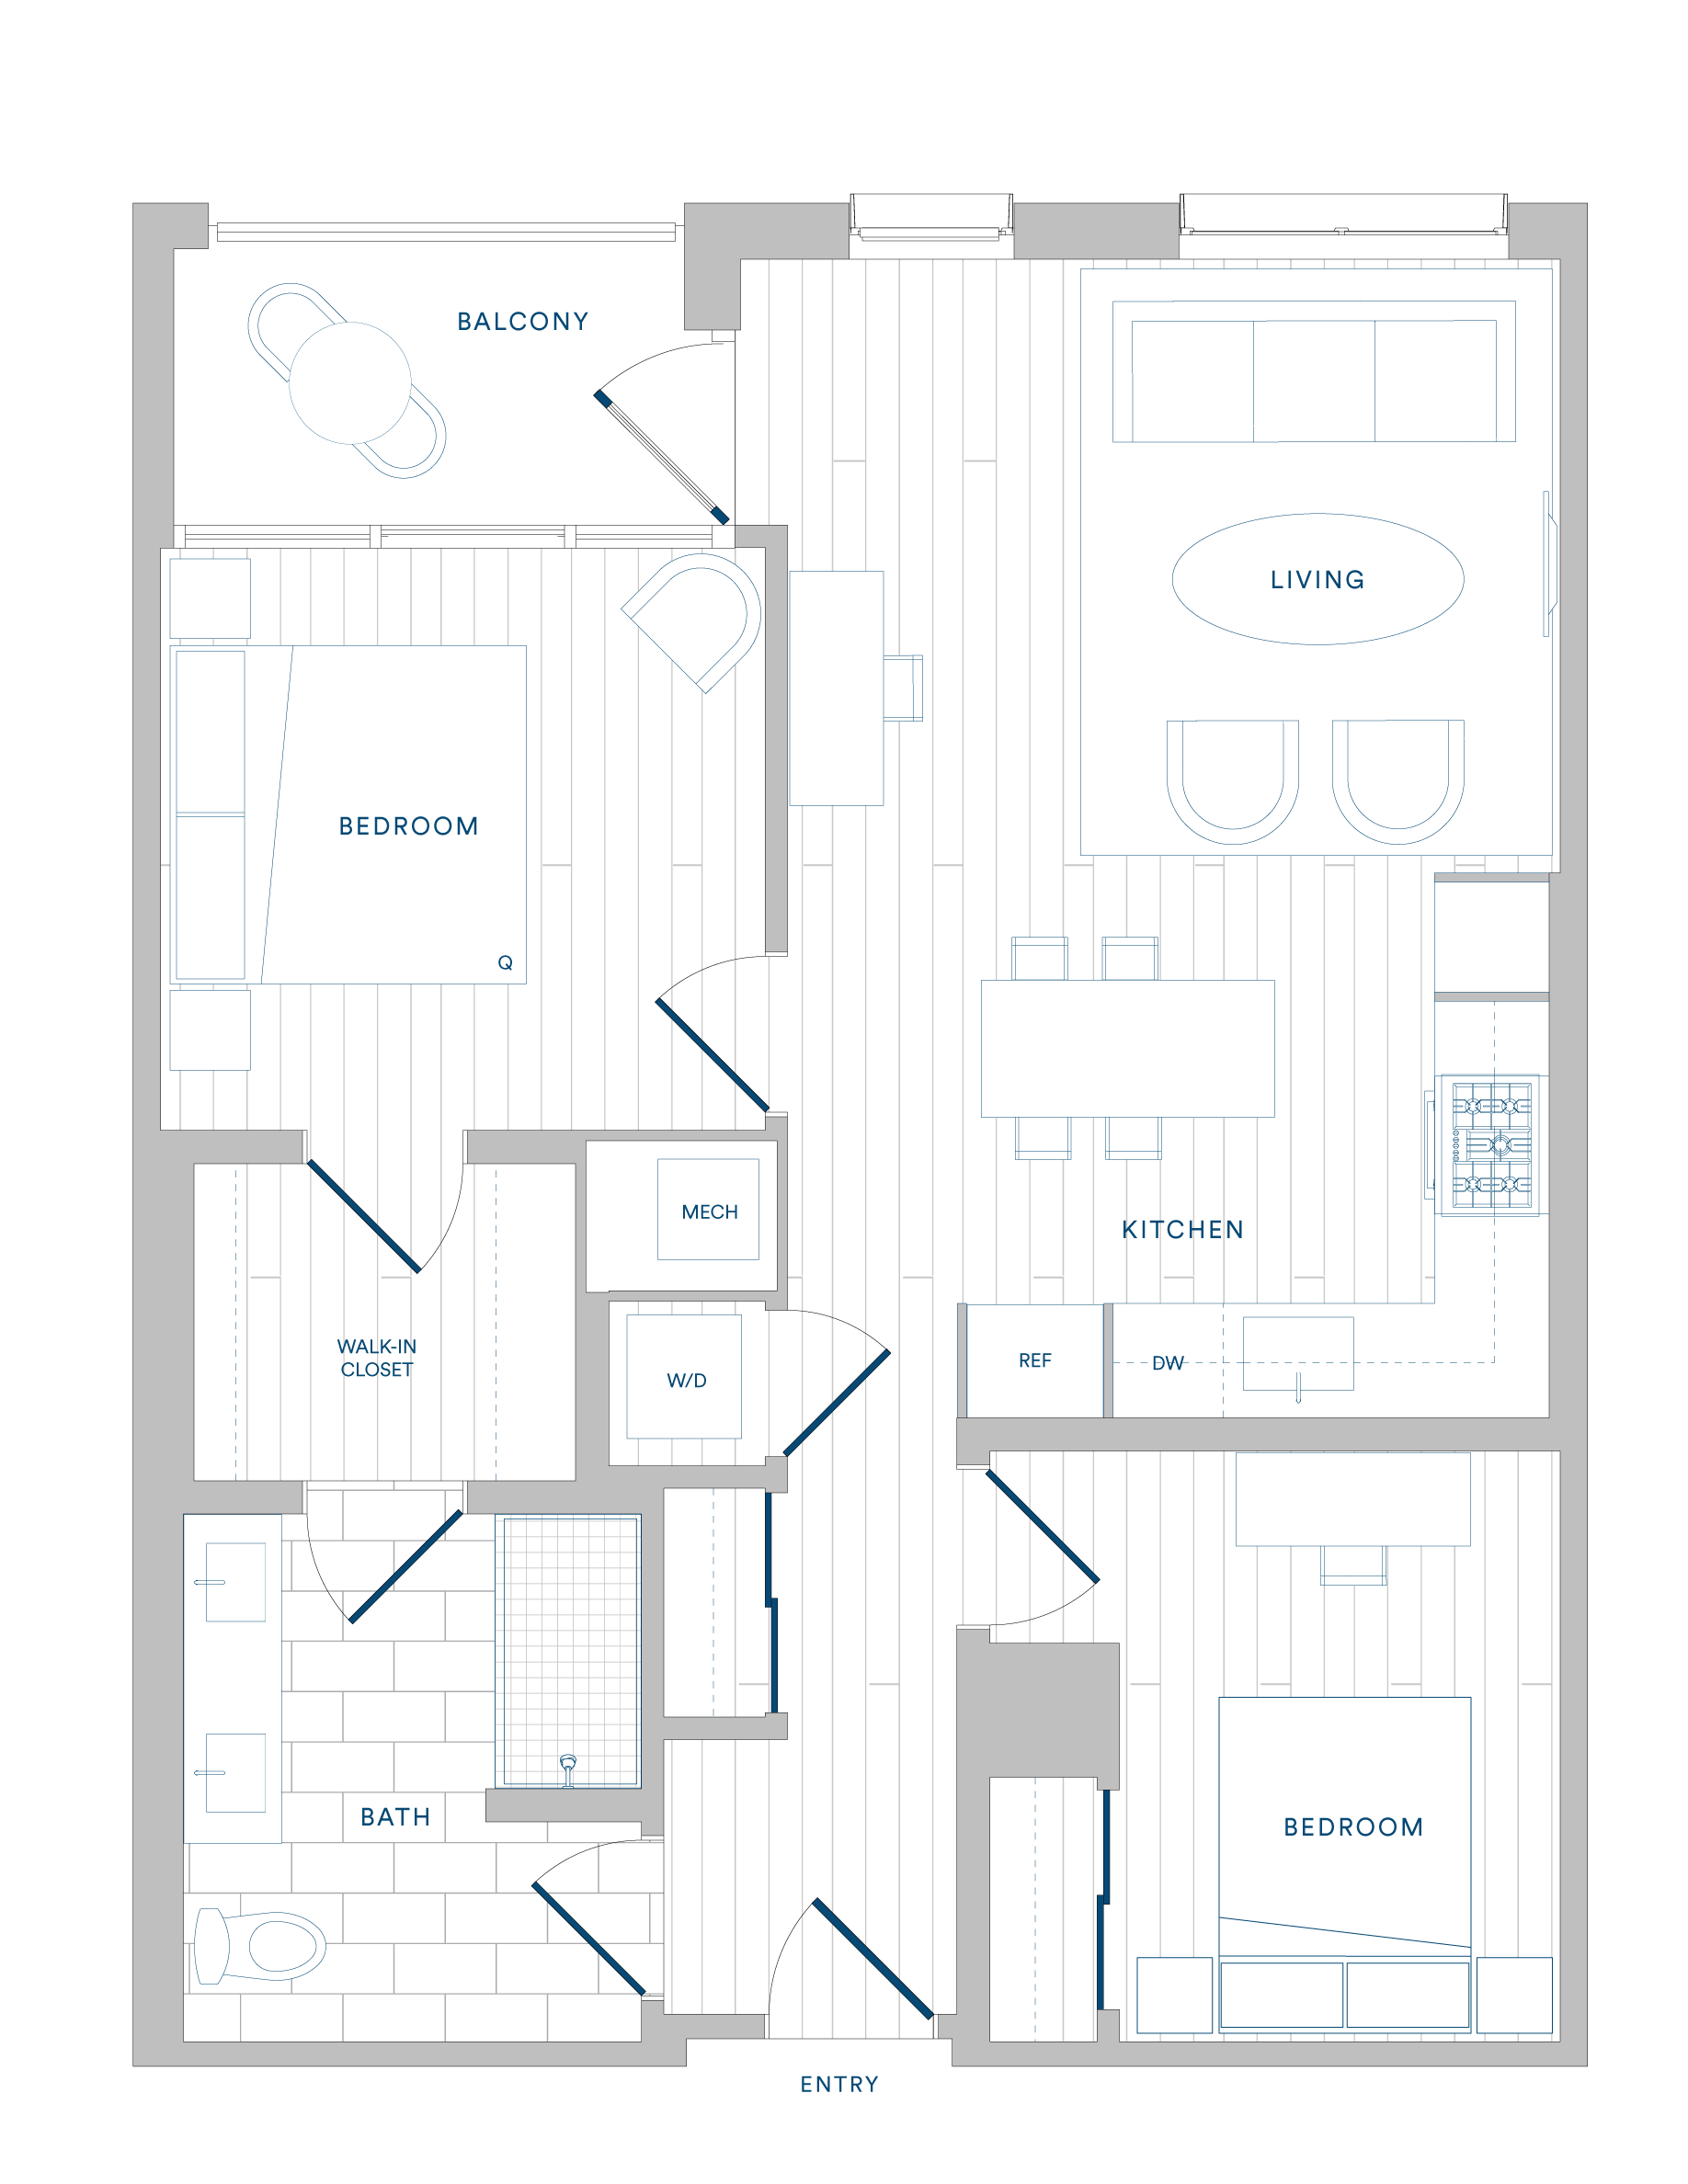 Floorplan for Apartment #613, 2 bedroom unit at Margarite